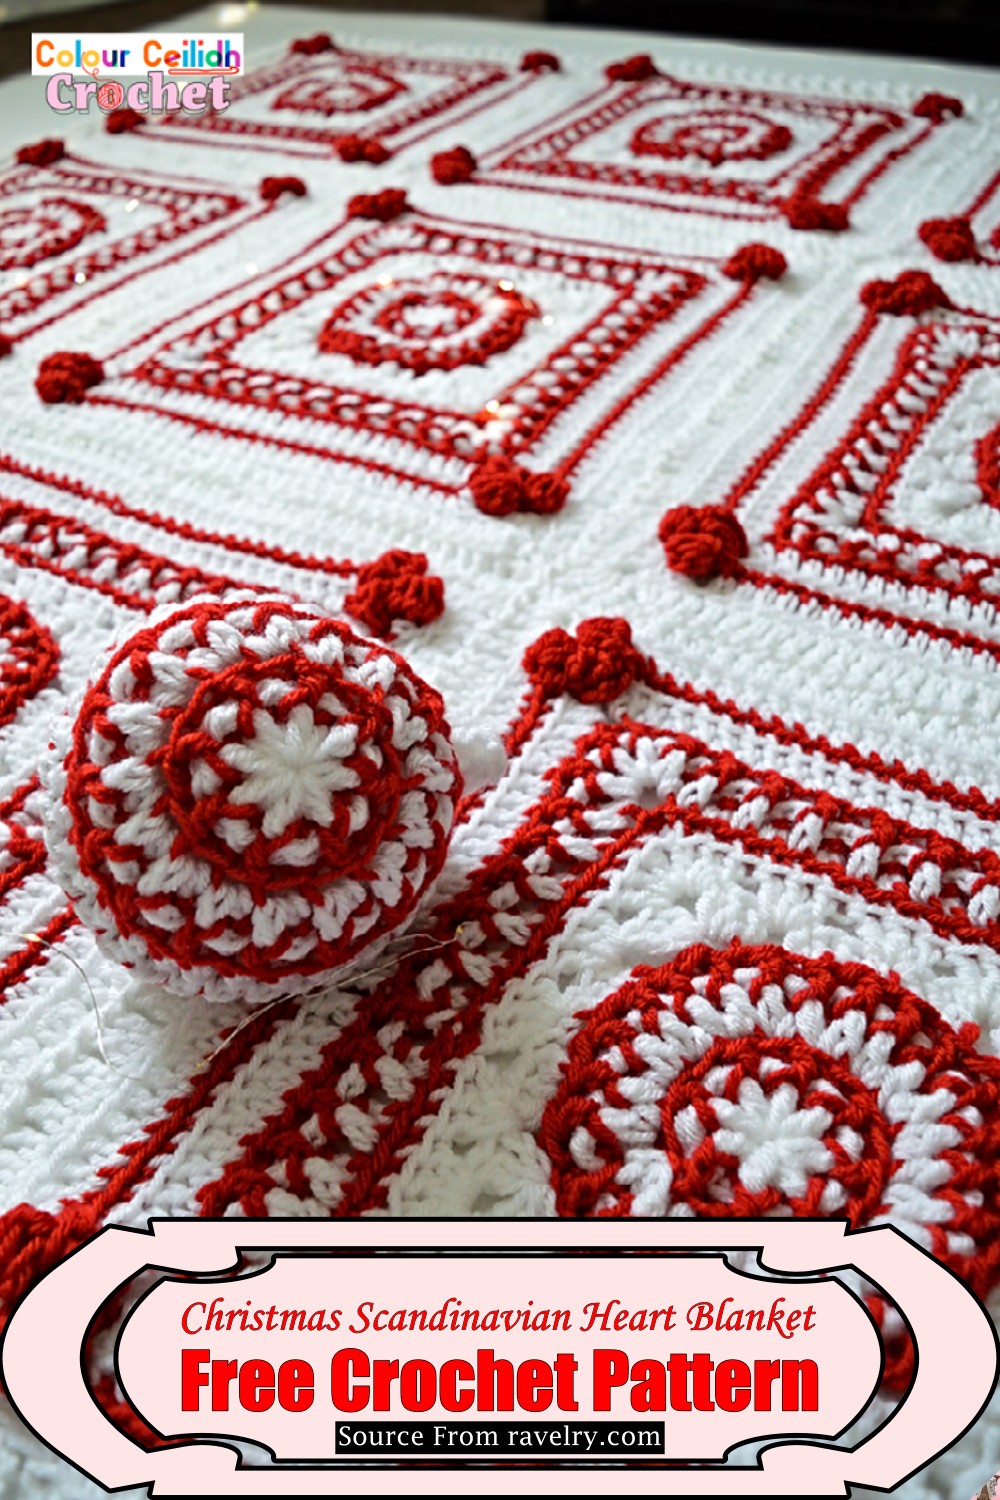 Crochet Christmas Scandinavian Heart Blanket Pattern